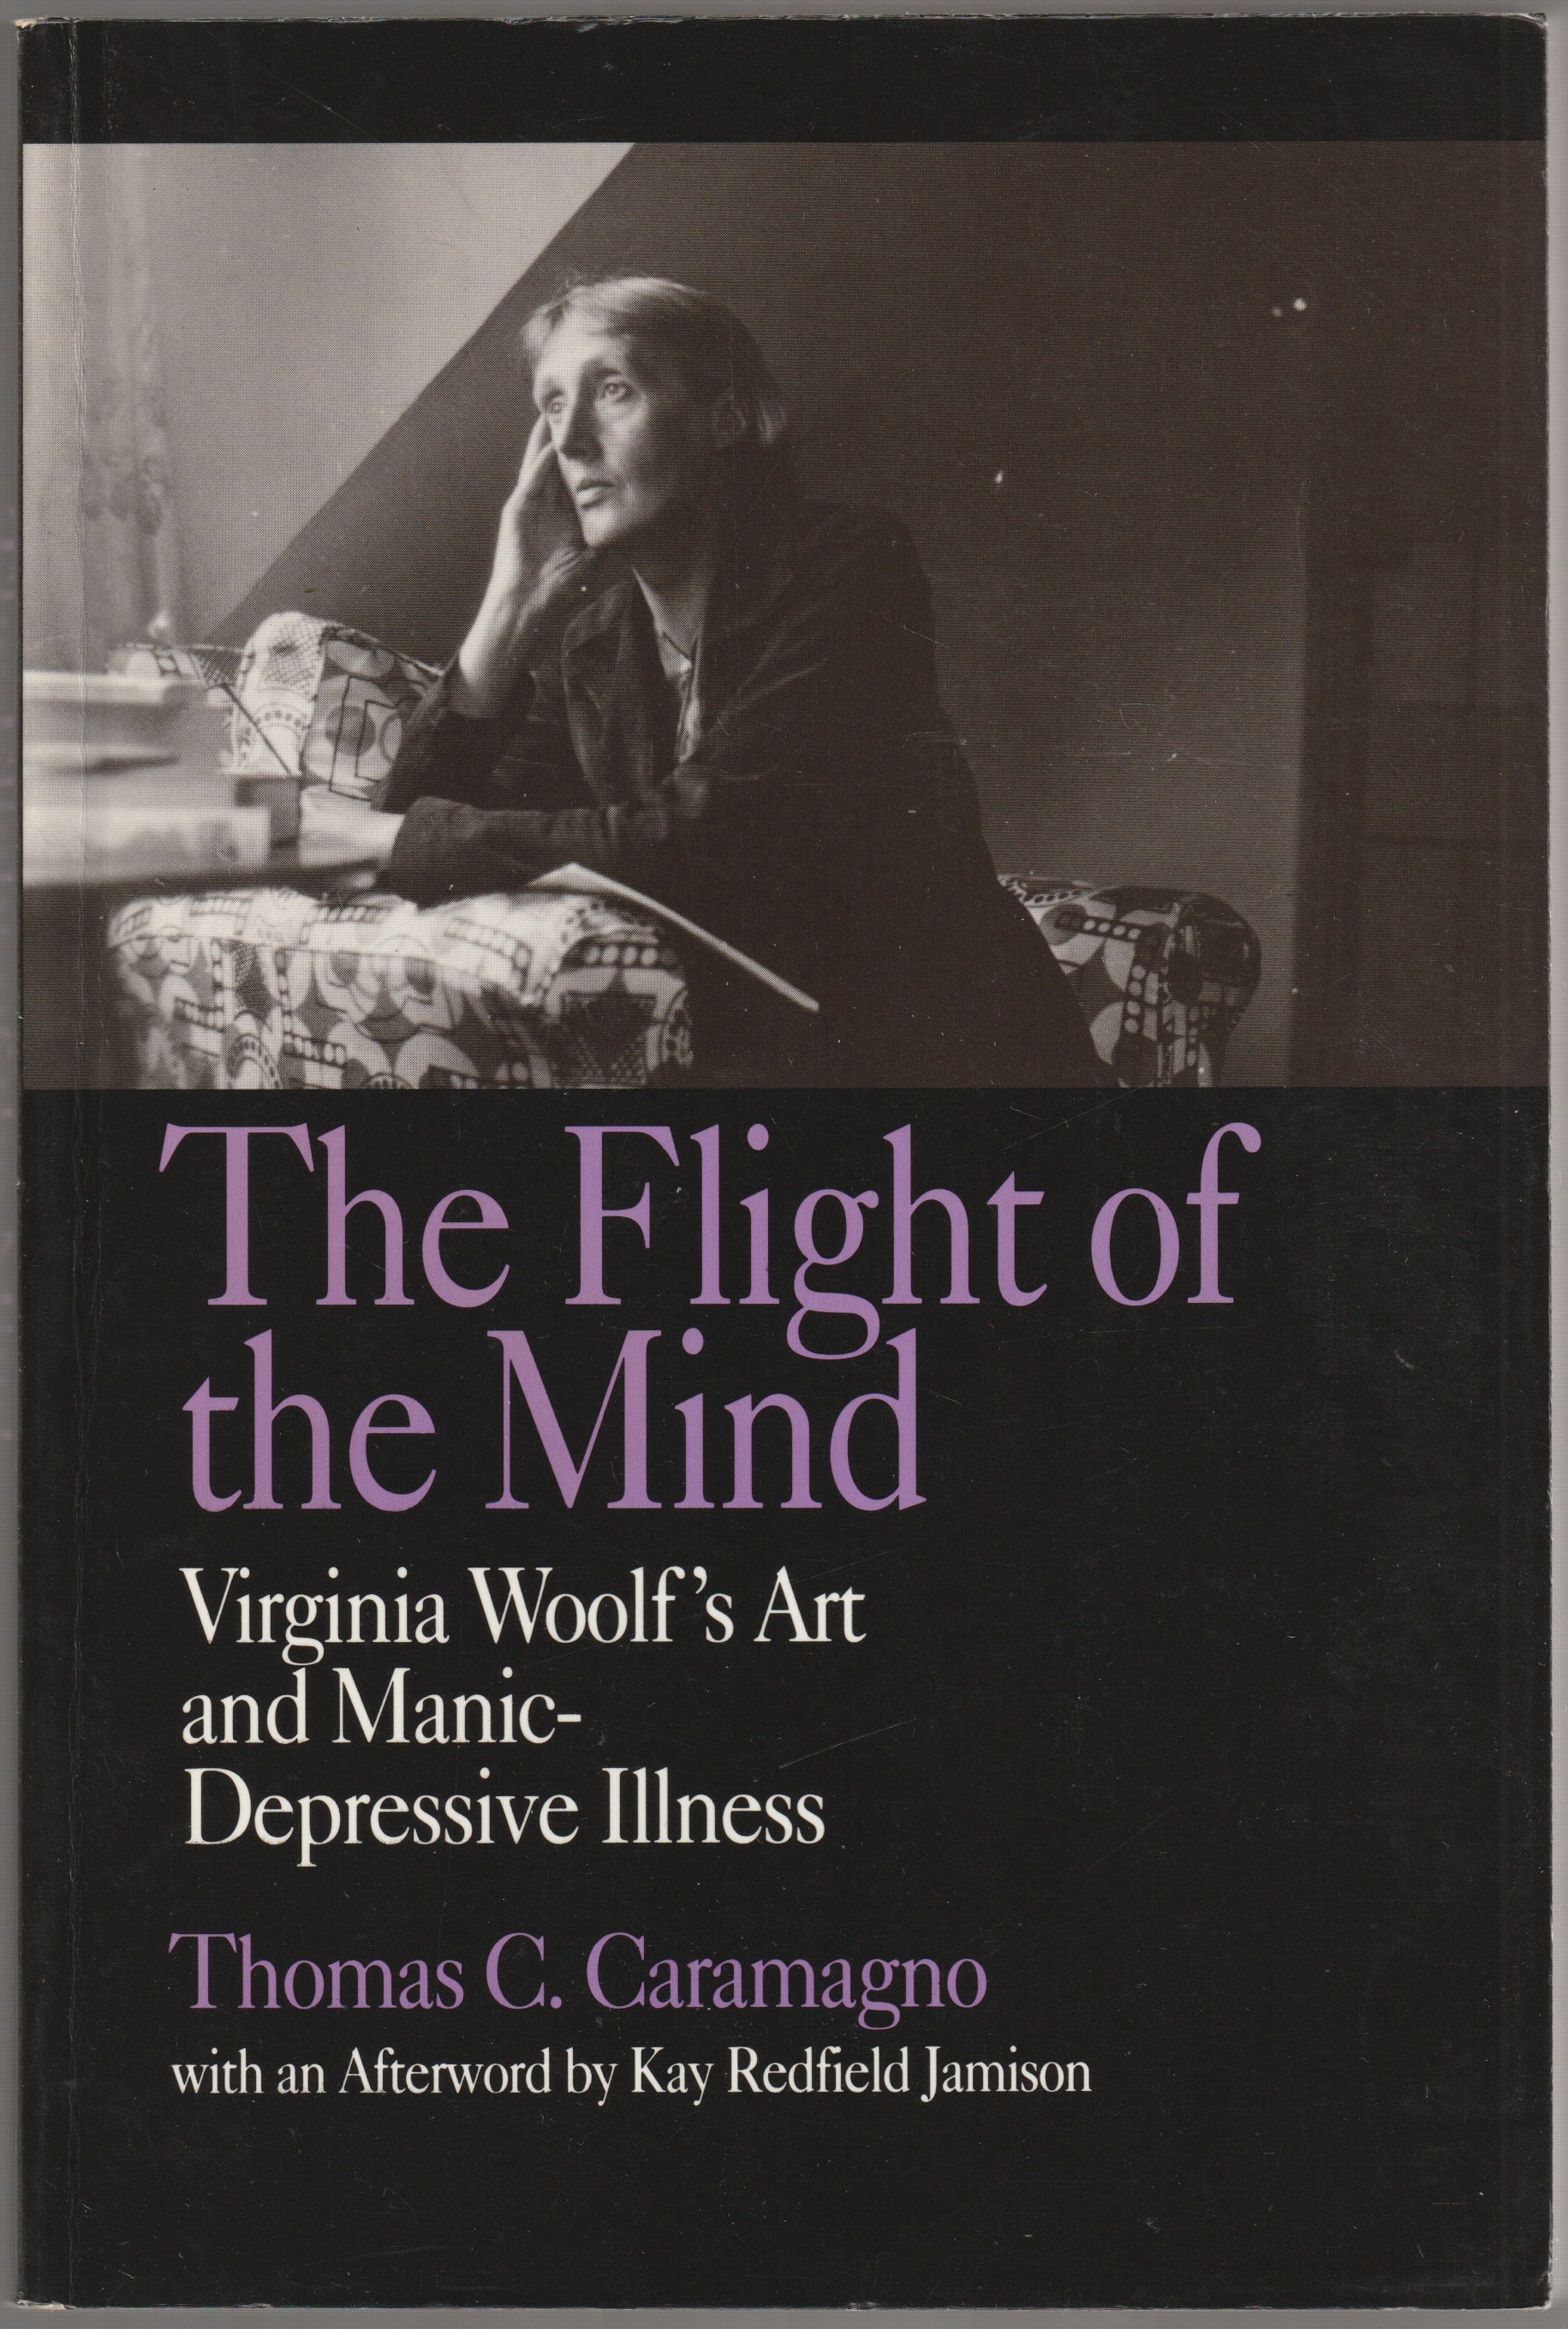 The flight of the mind : Virginia Woolf's art and manic-depressive illness.